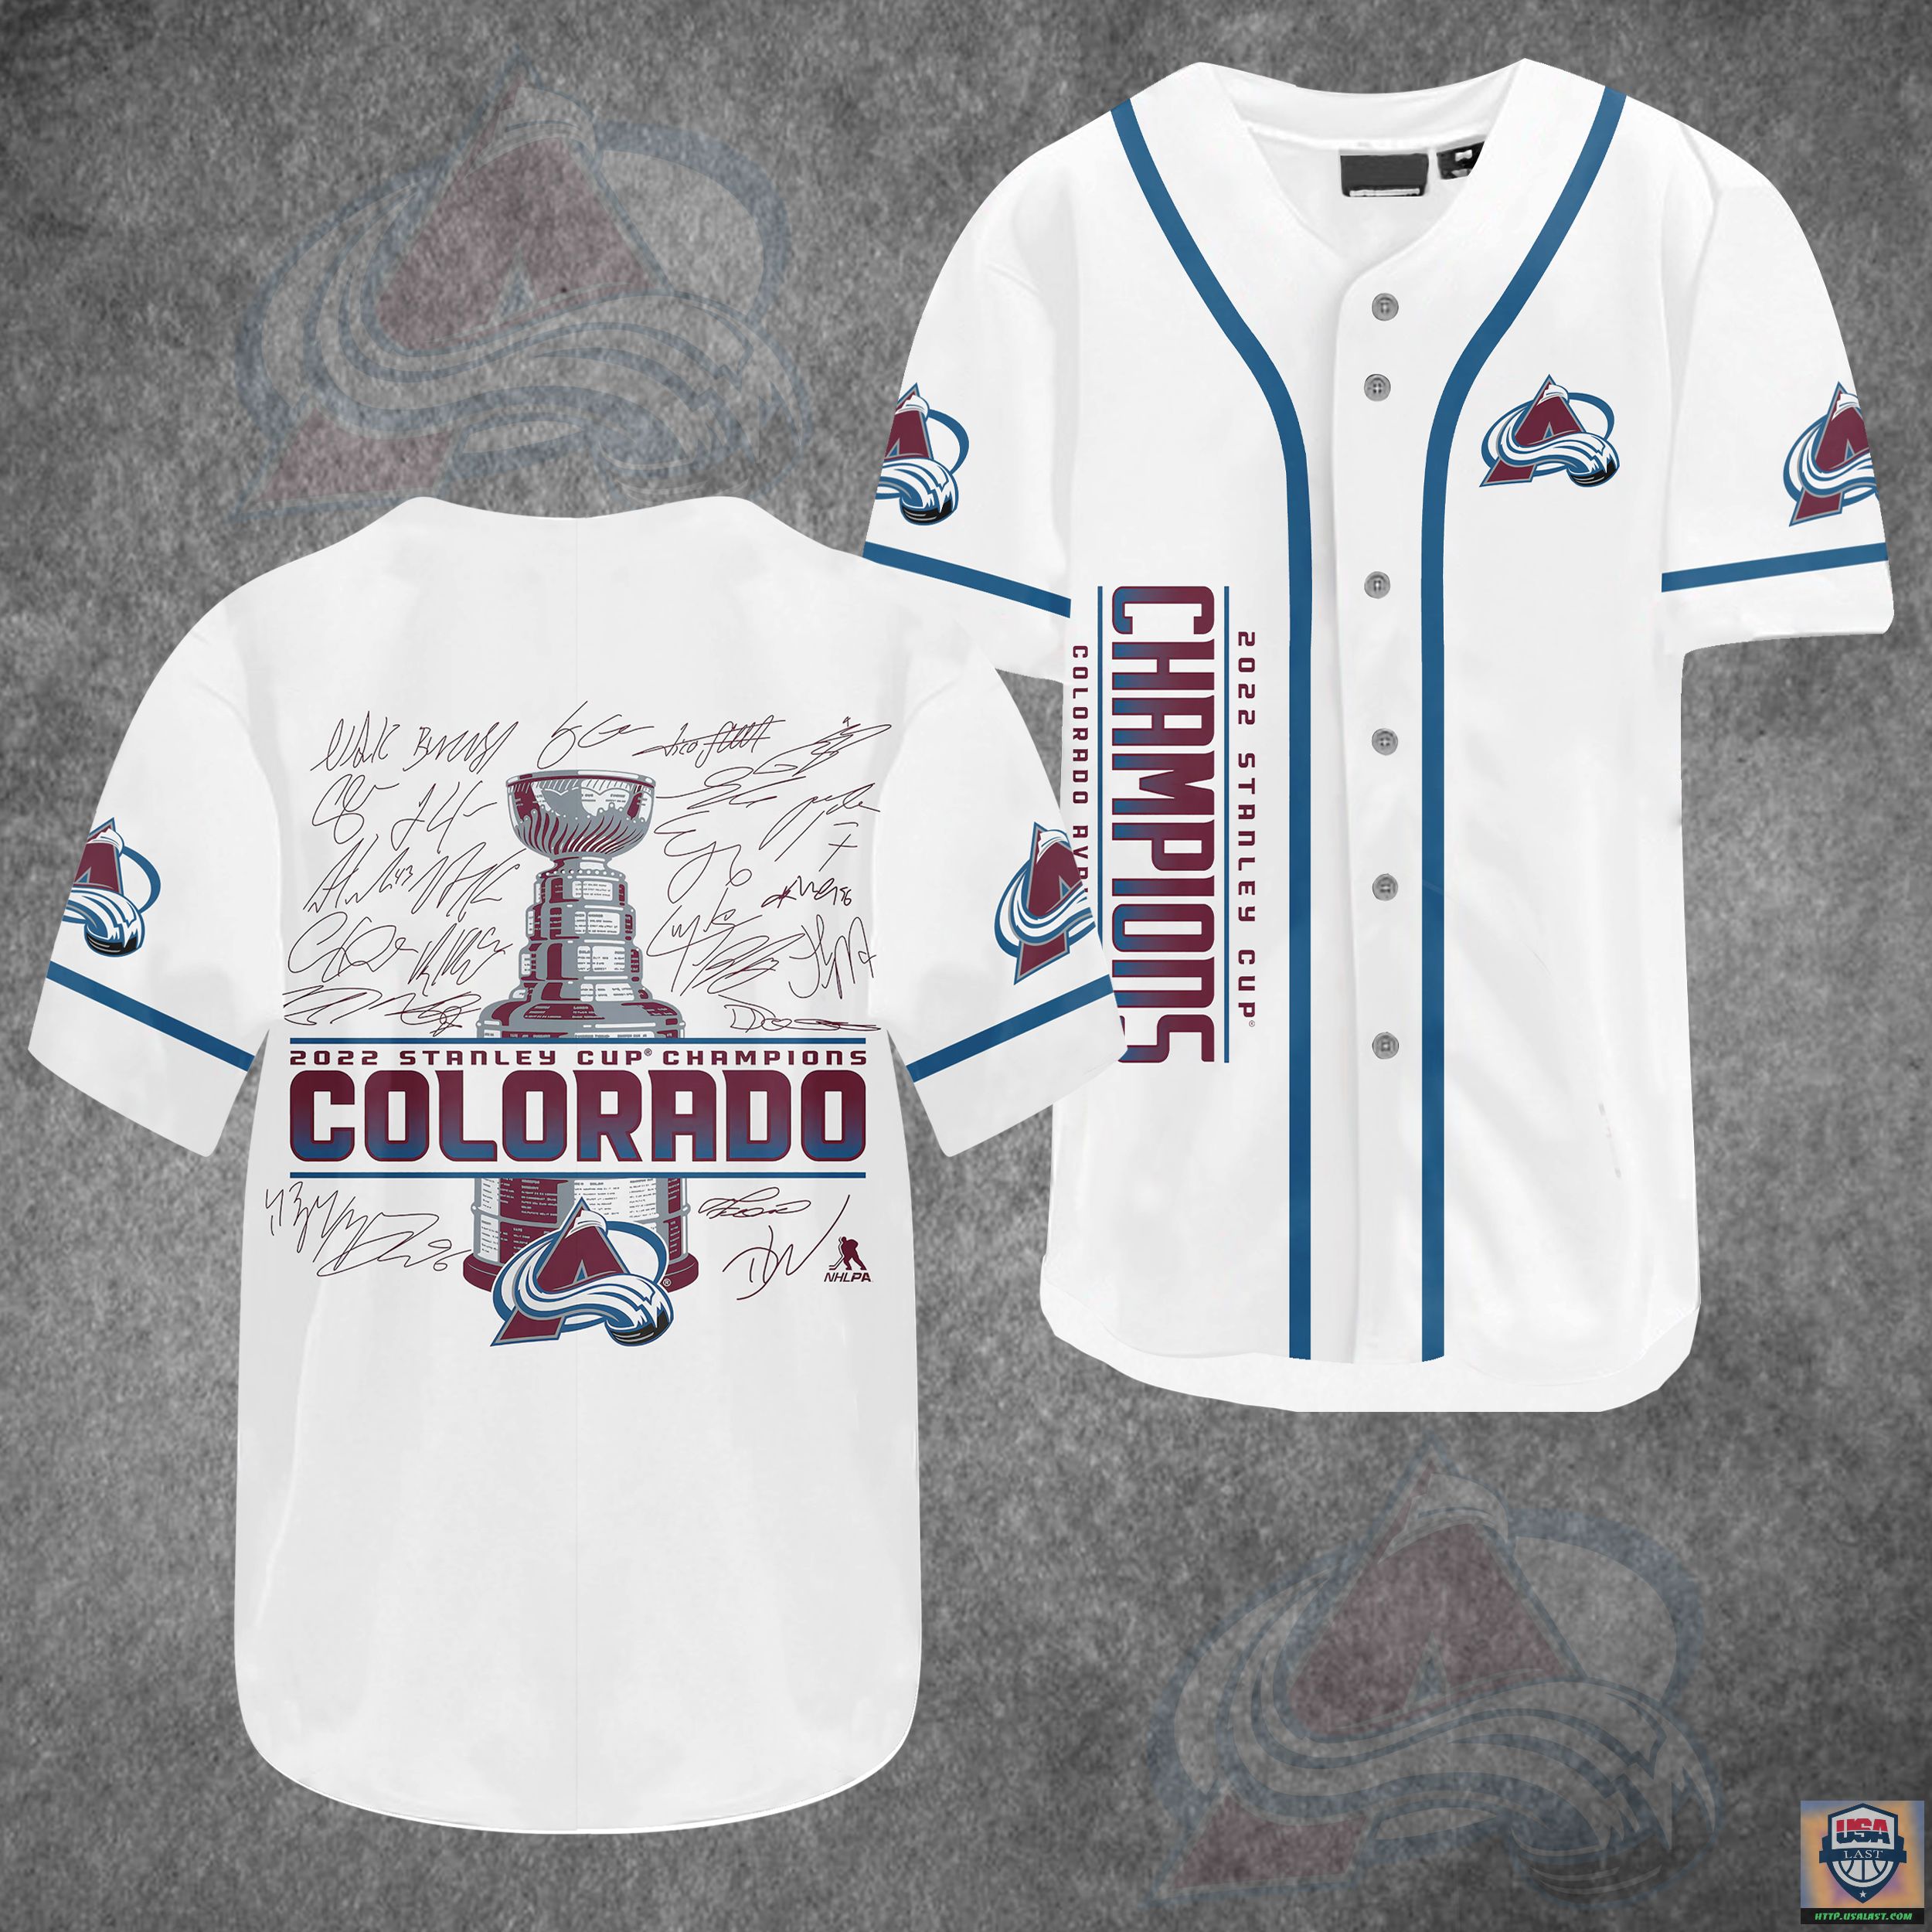 Colorado Avalanche Champion Baseball Jersey Shirt – Usalast